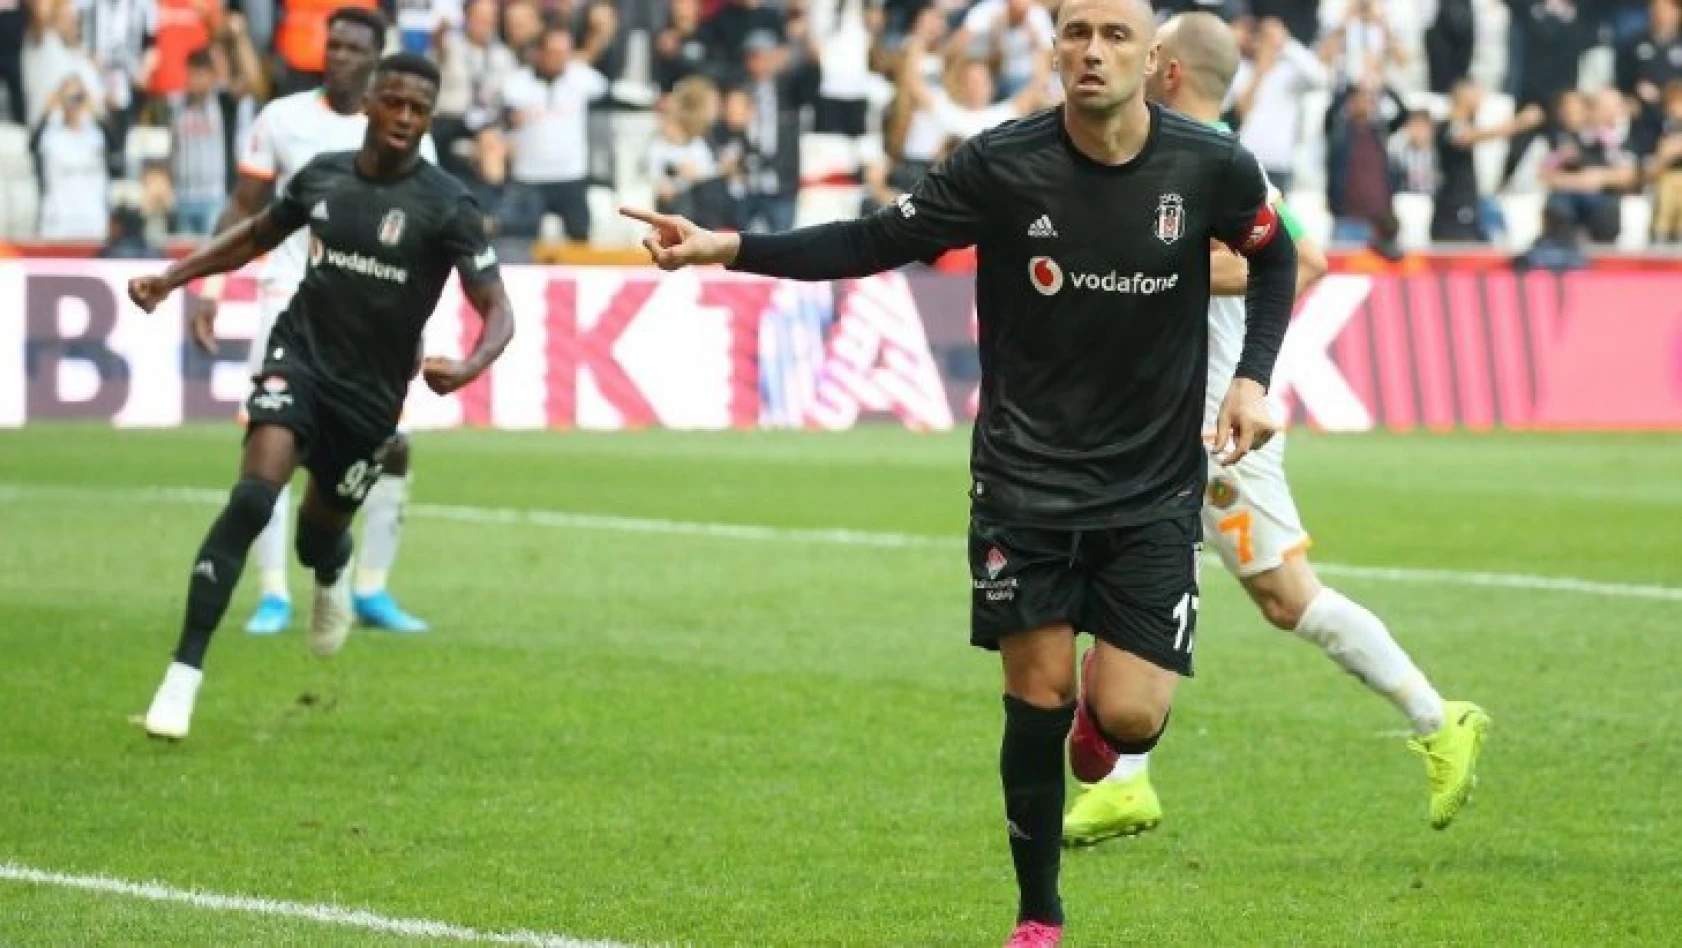 Beşiktaş lider Alanyaspor'u devirdi, 3 puanı kaptı